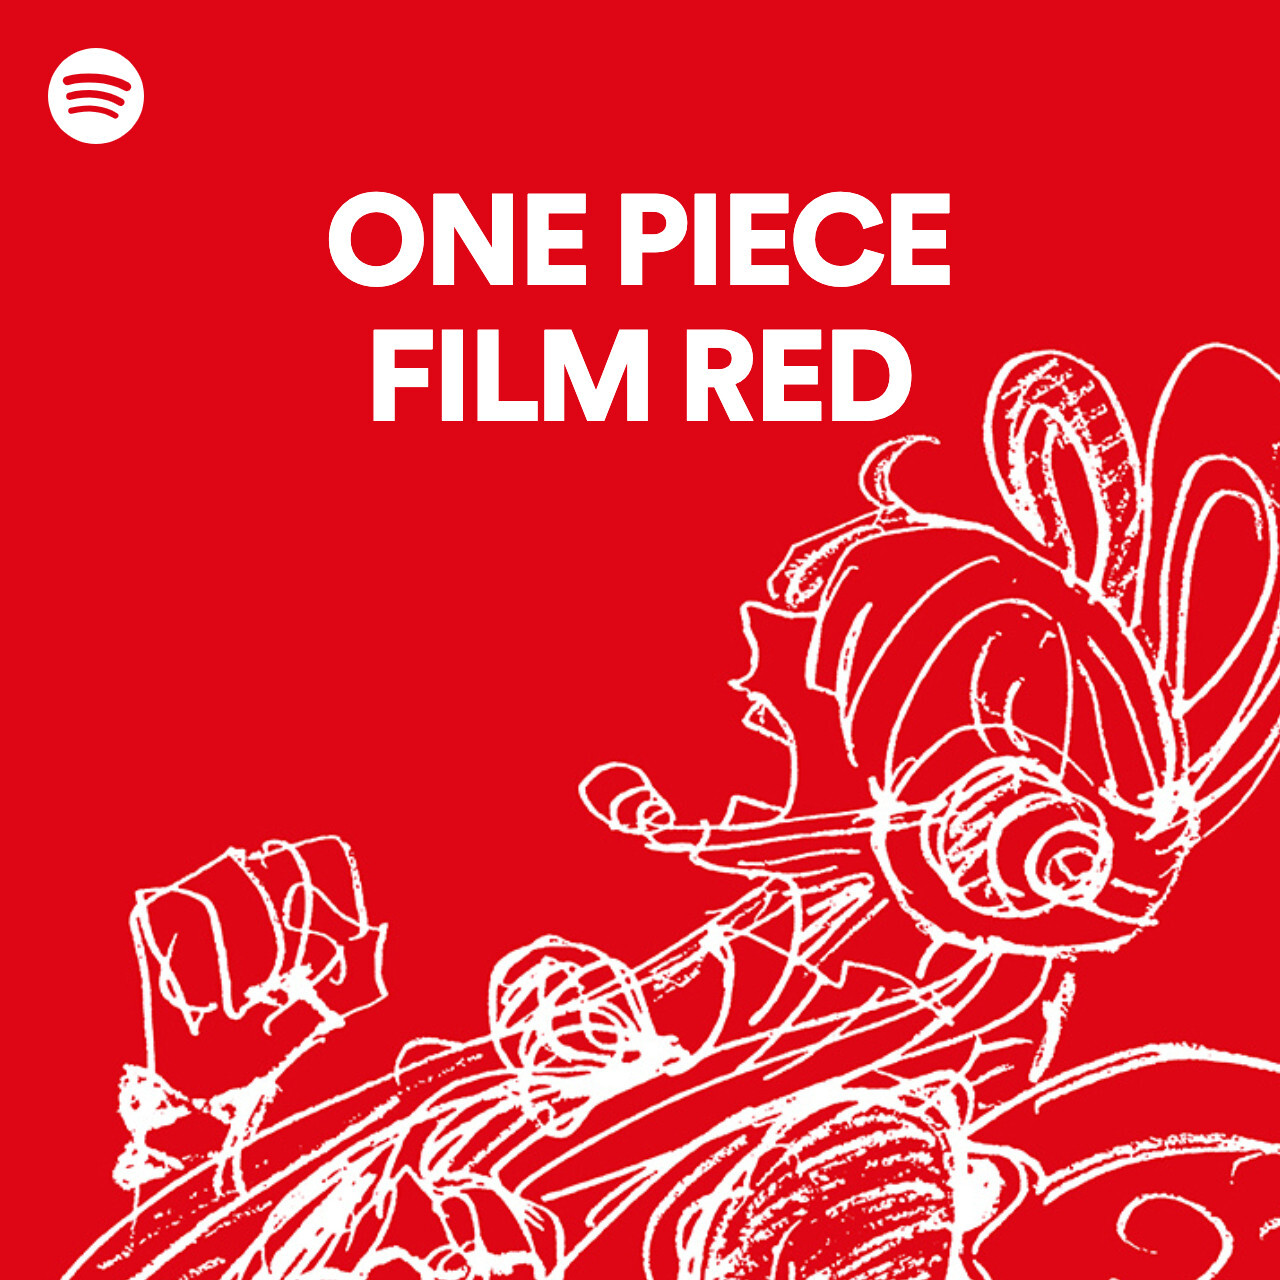 『ONE PIECE FILM RED』